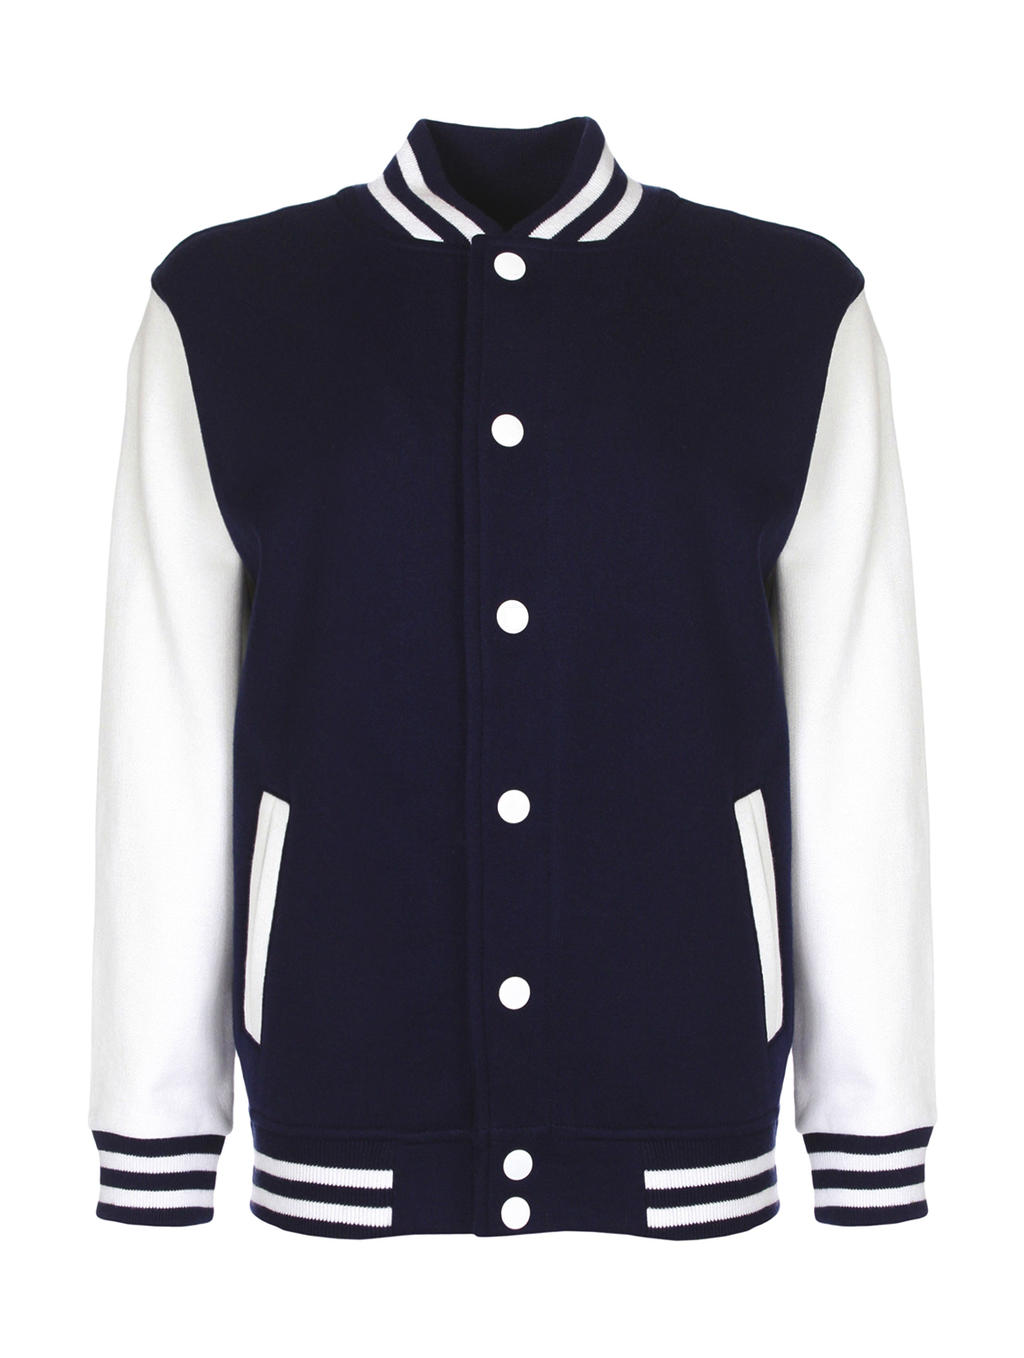  Junior Varsity Jacket in Farbe Navy/White